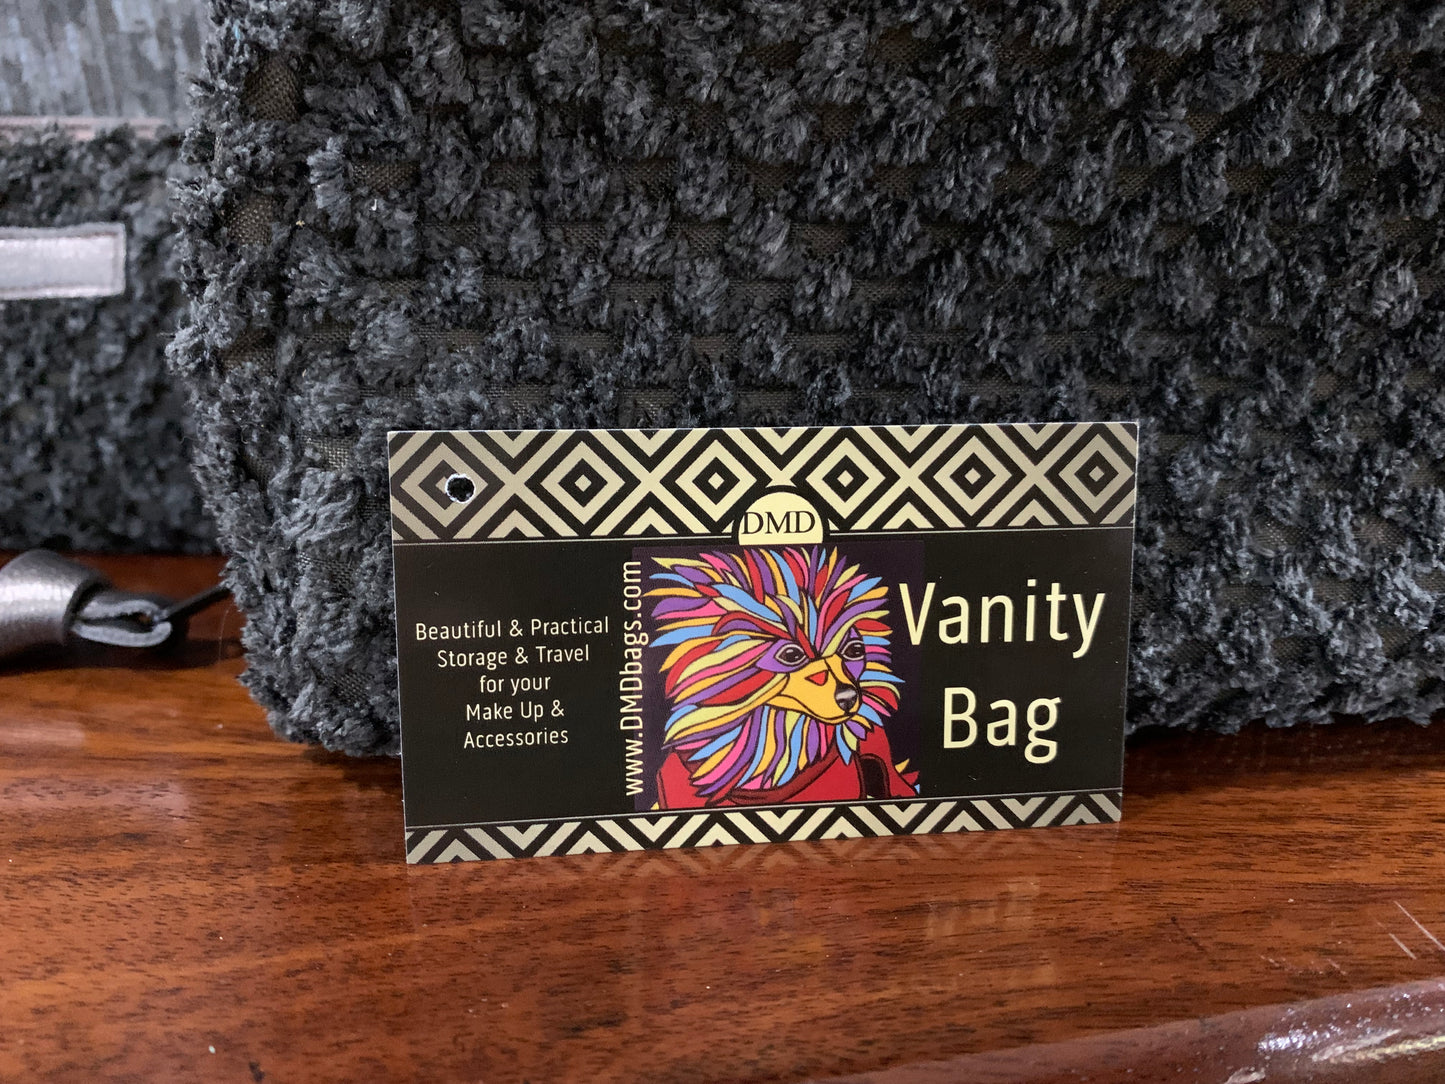 Vanity Bag & Pouch set - DMD Bags